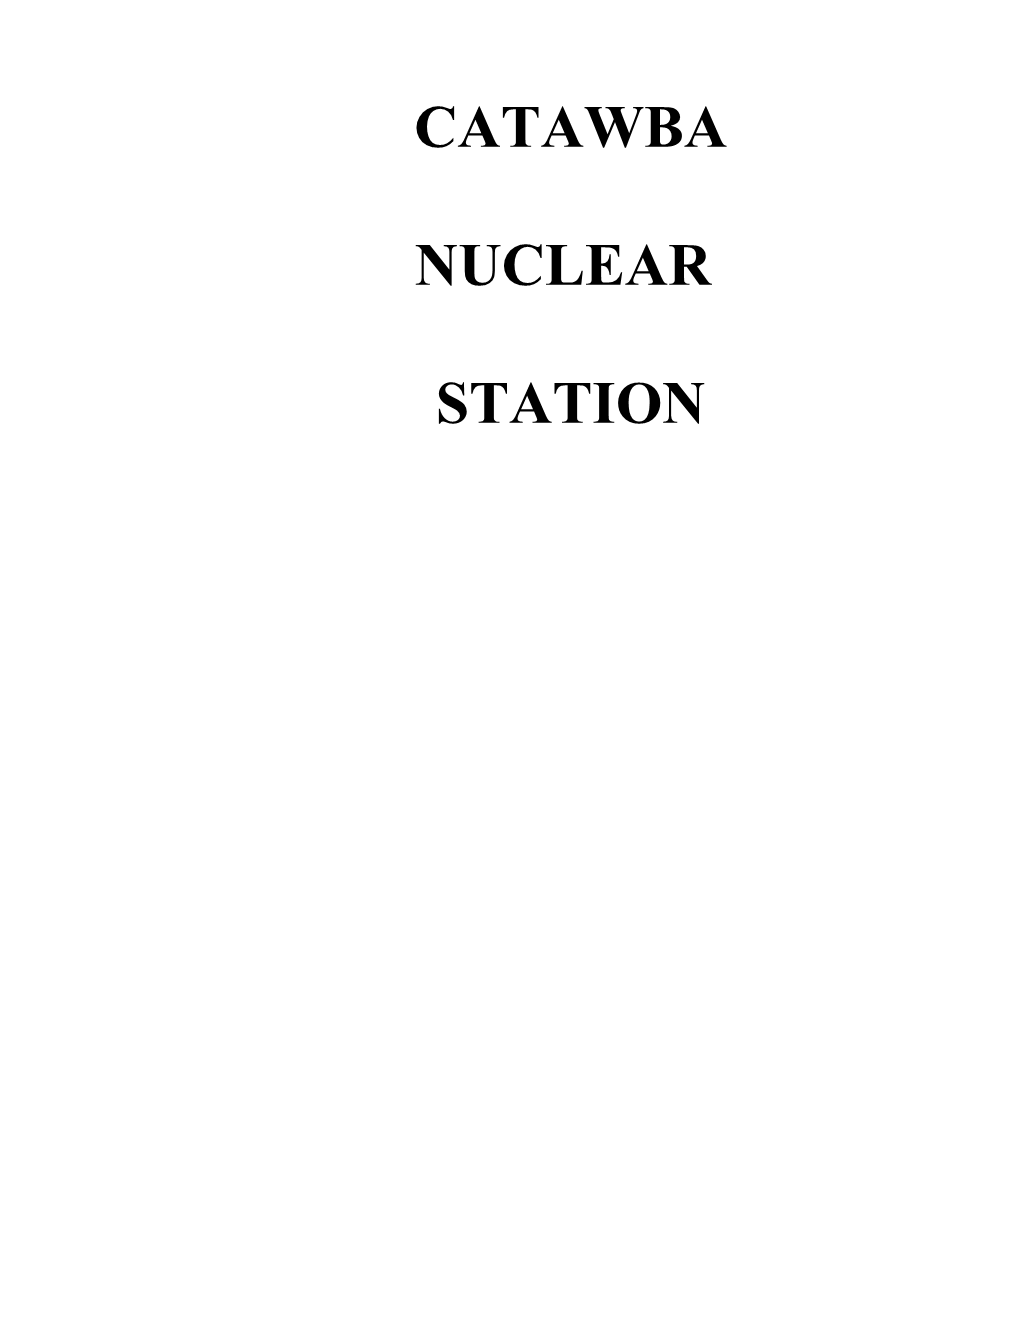 Section X: Catawba Nuclear Station, Lake Wylie, South Carolina